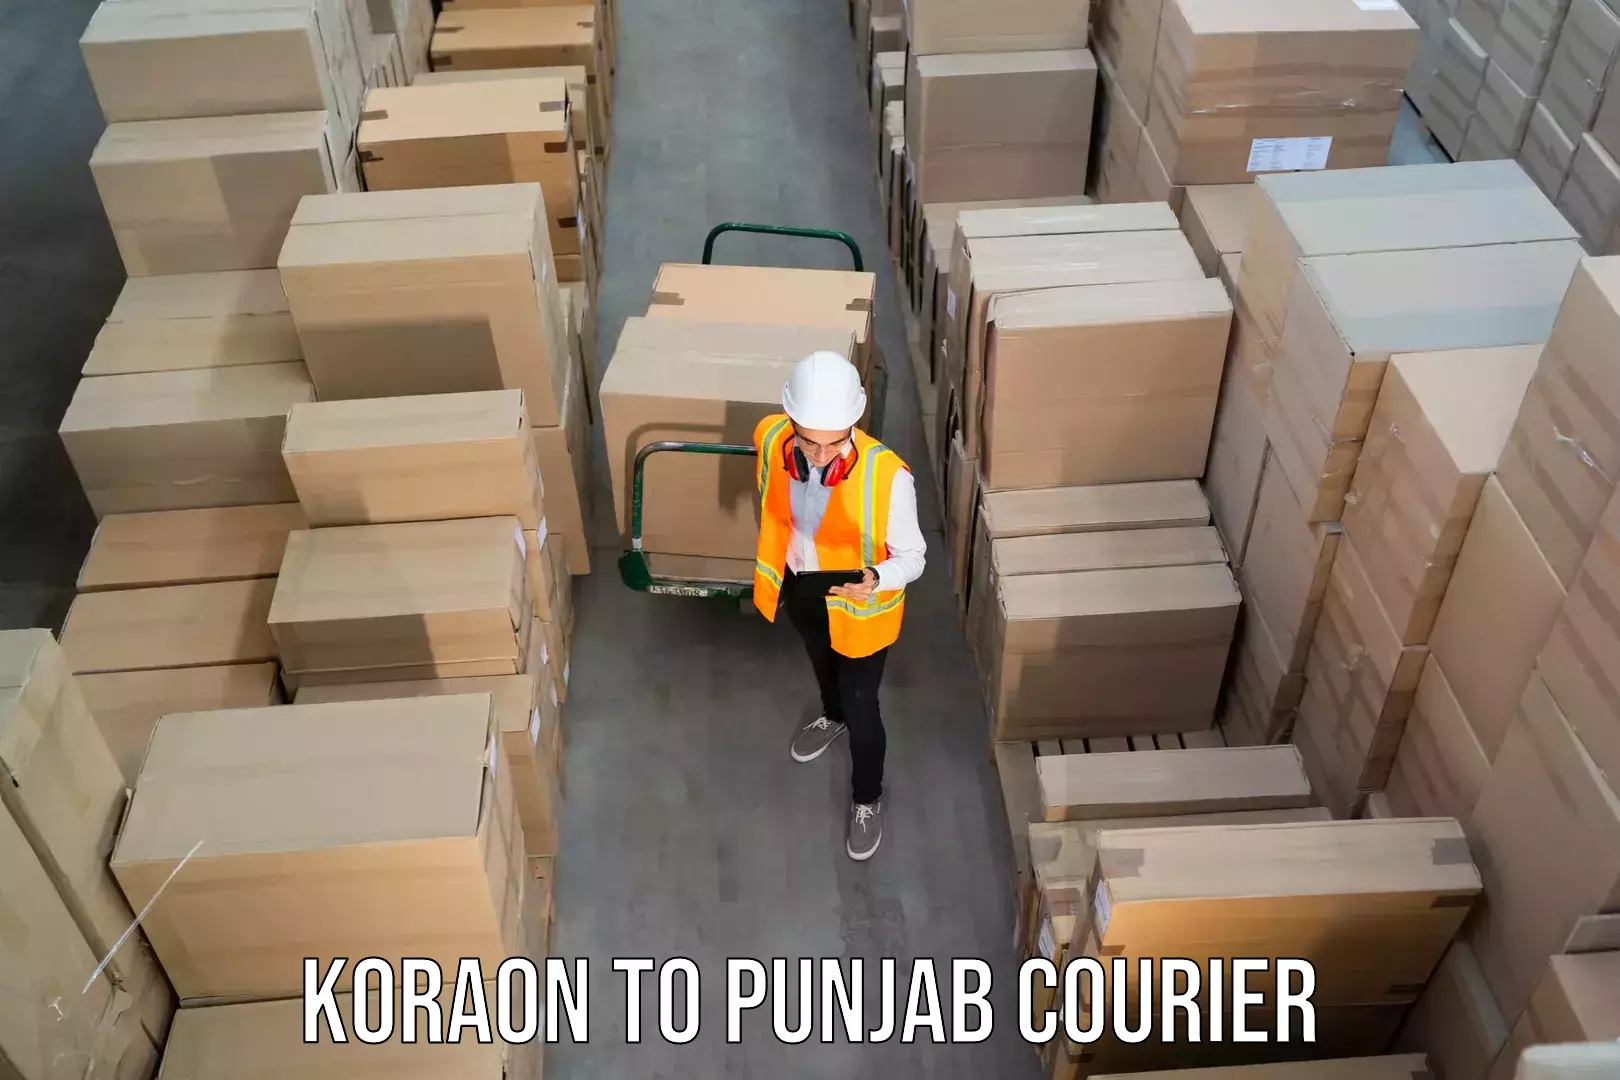 User-friendly courier app Koraon to Punjab